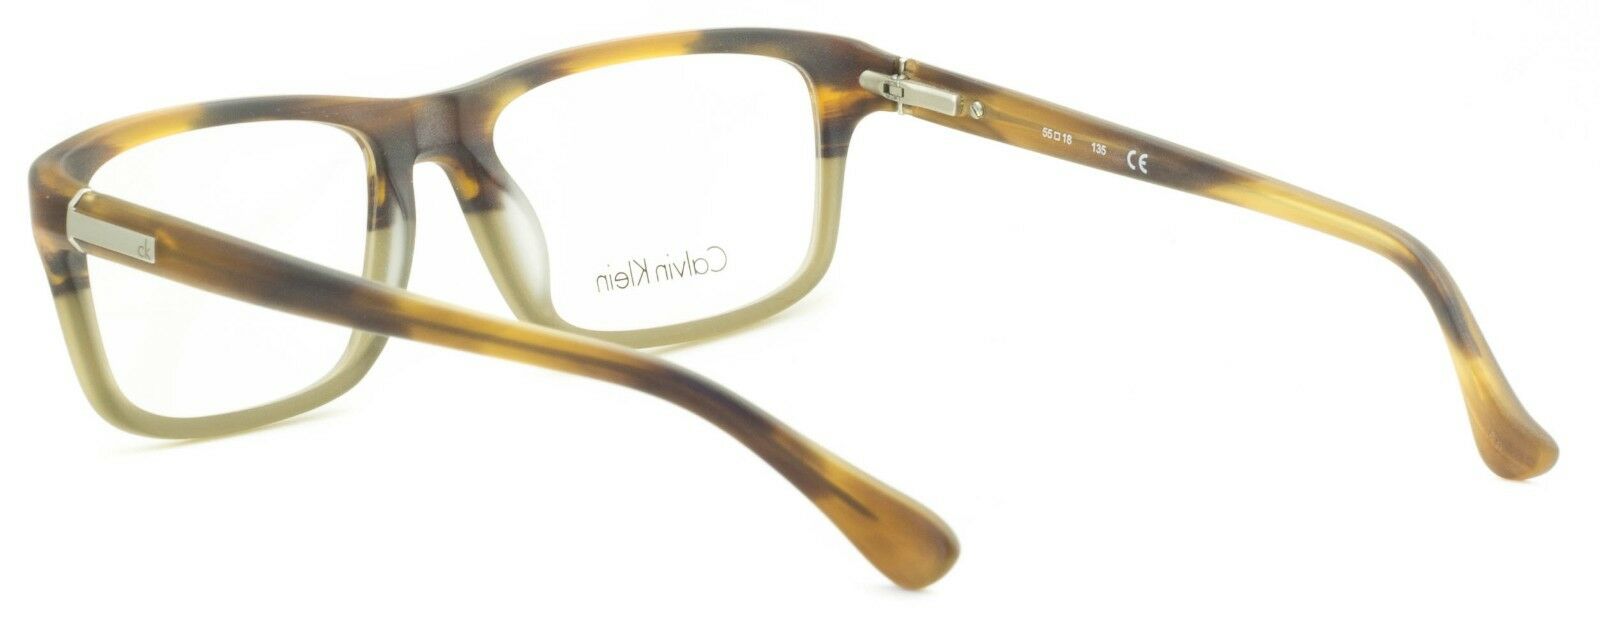 CALVIN KLEIN CK5839 507 Eyewear RX Optical FRAMES NEW Eyeglasses Glasses - BNIB